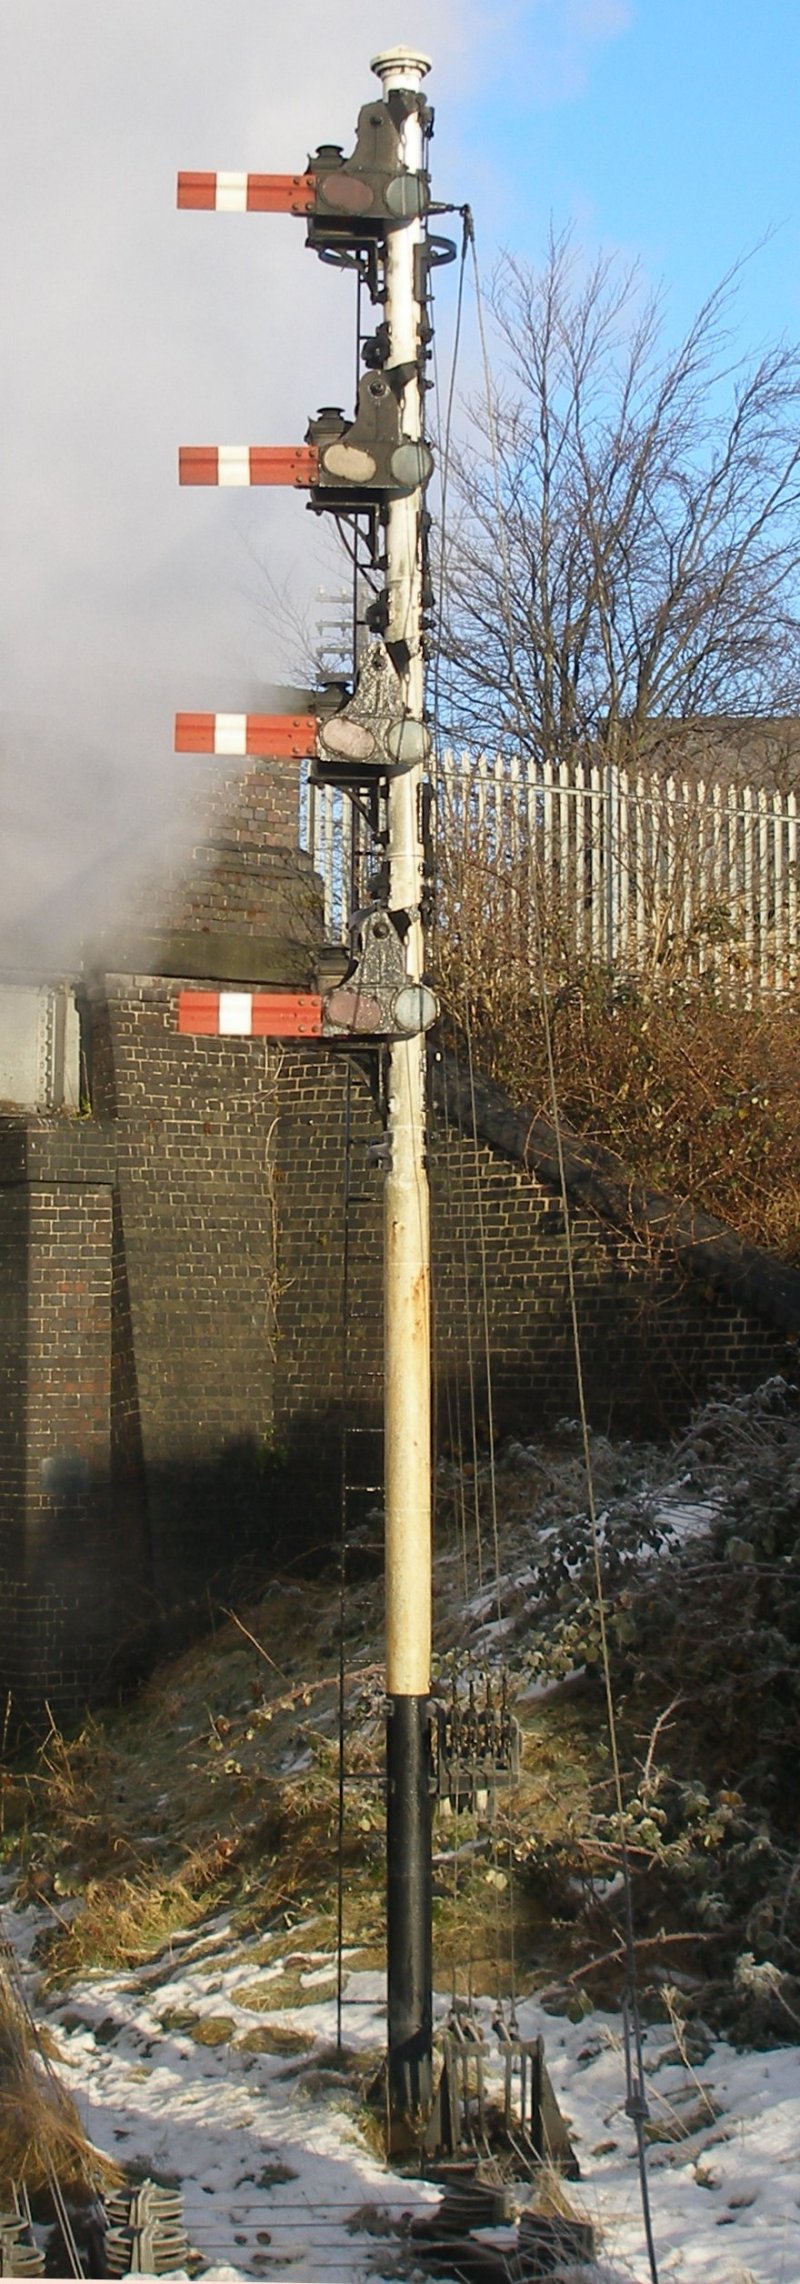 LNE shunting signals, Beccles Road Bridge, Loughborough, 30 December 2014.